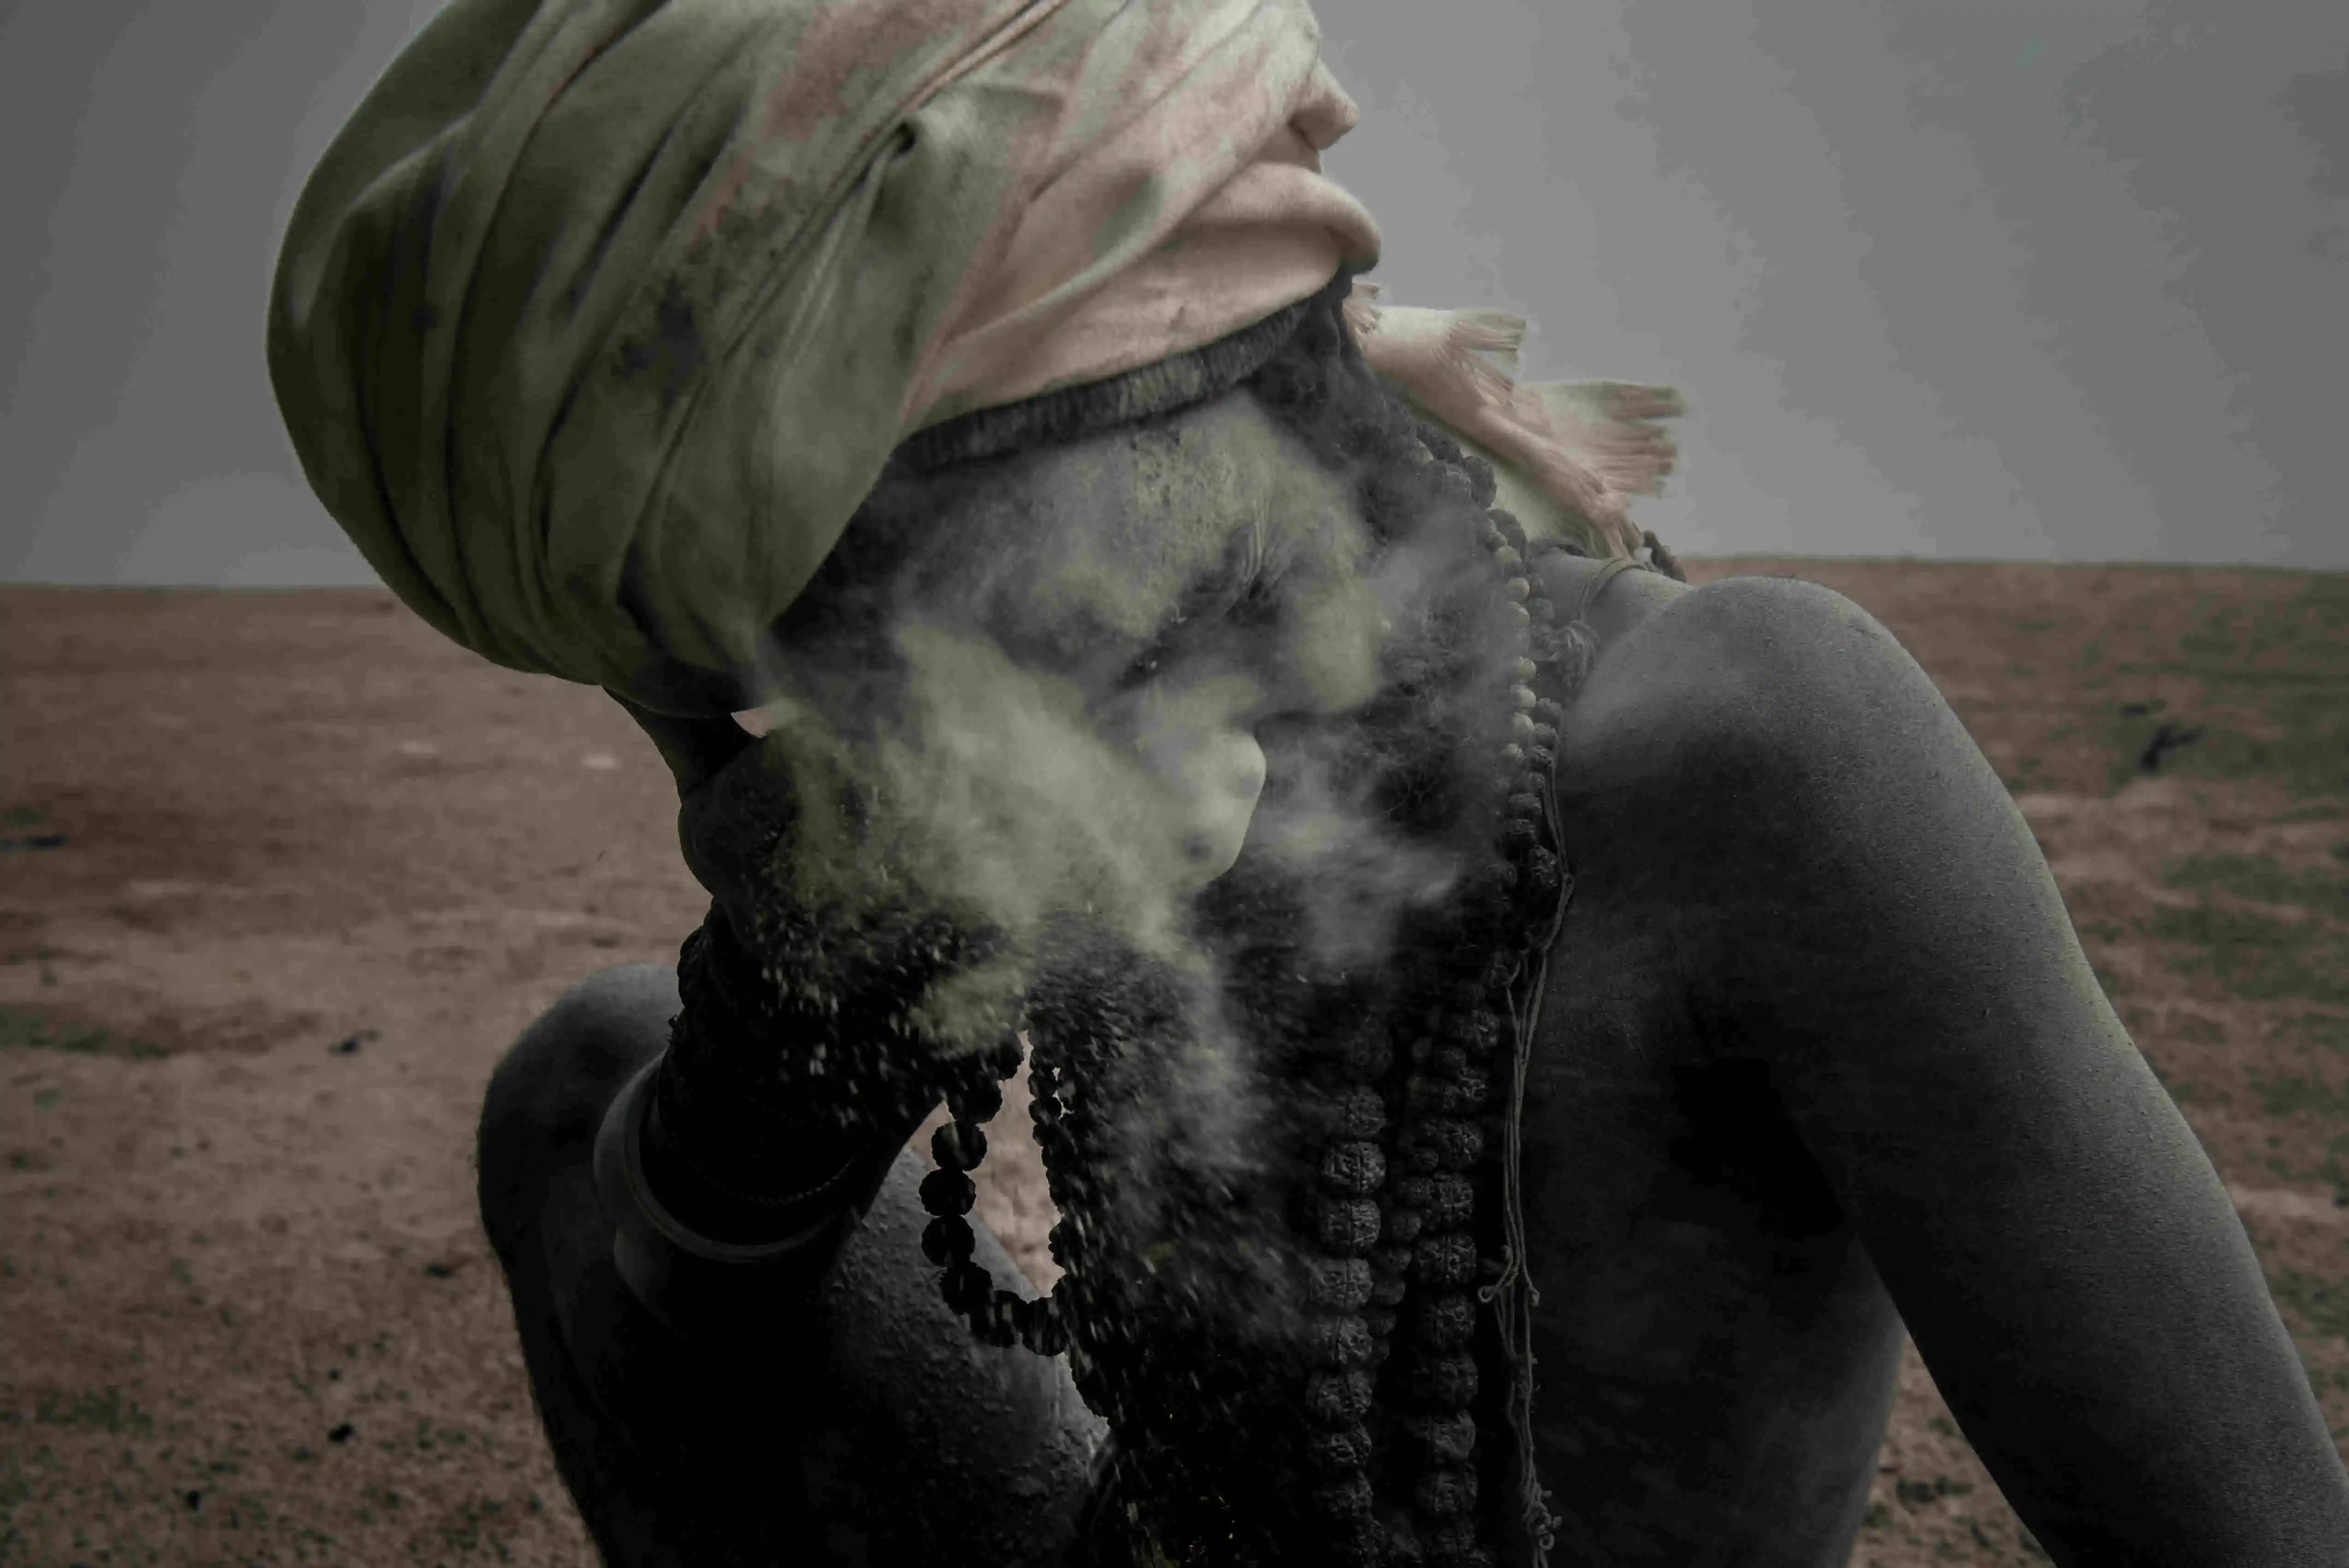 An Aghor smearing ash on his face. Source: thesun.co.uk Jay Skwara